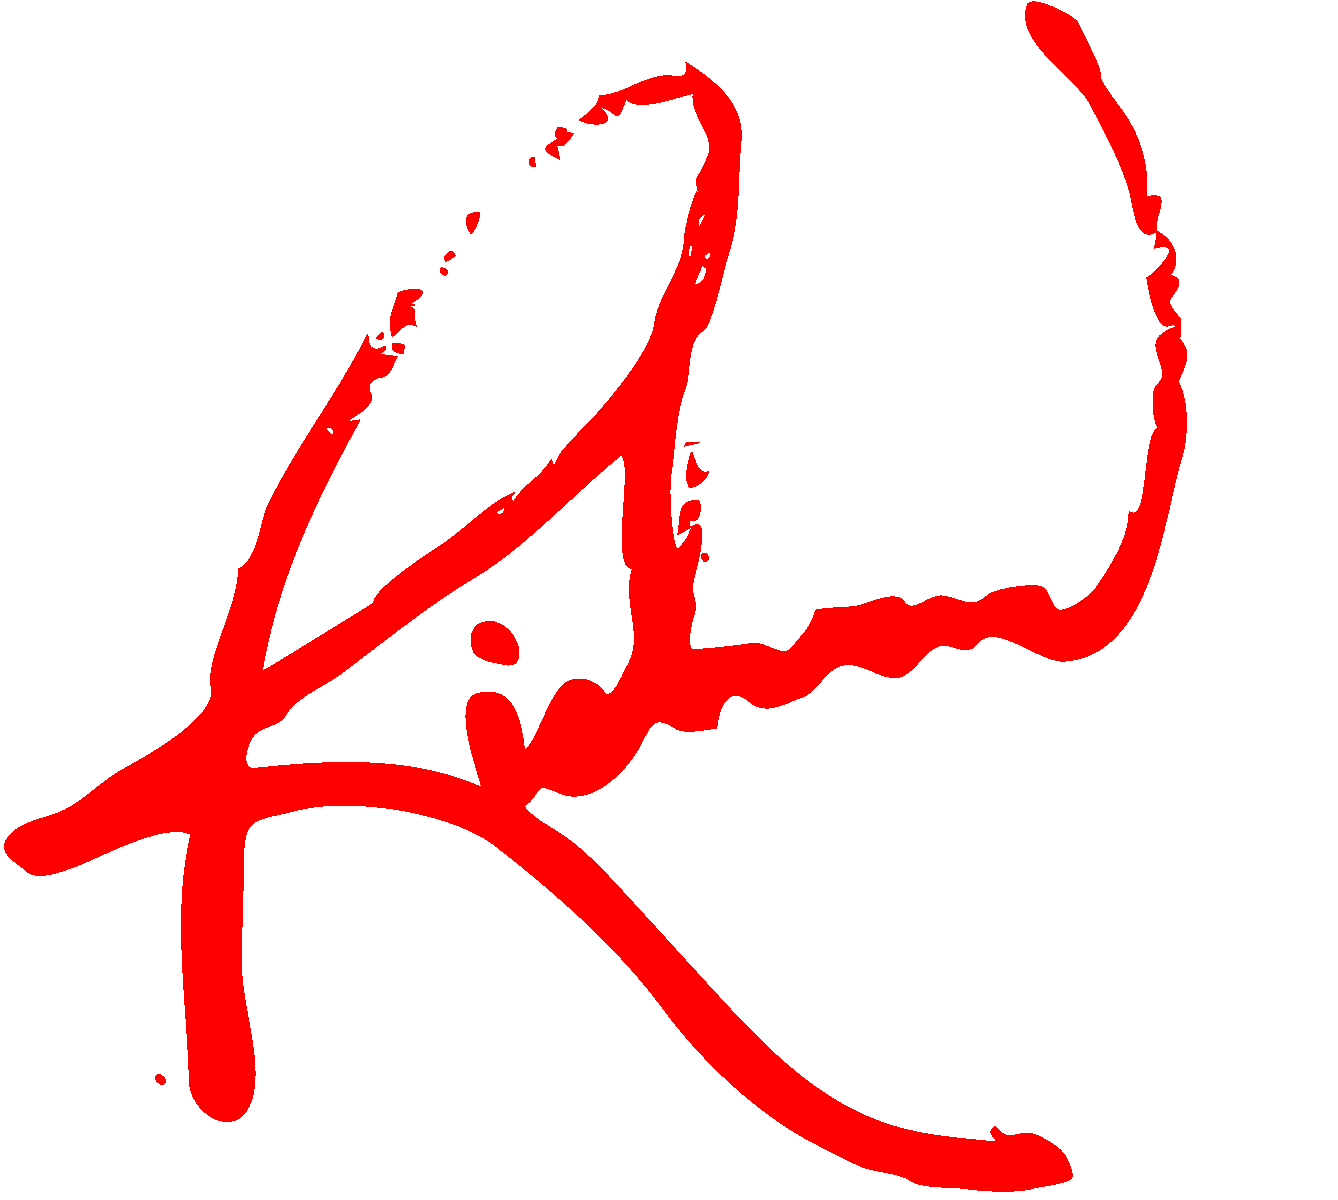 Richard Robot signature